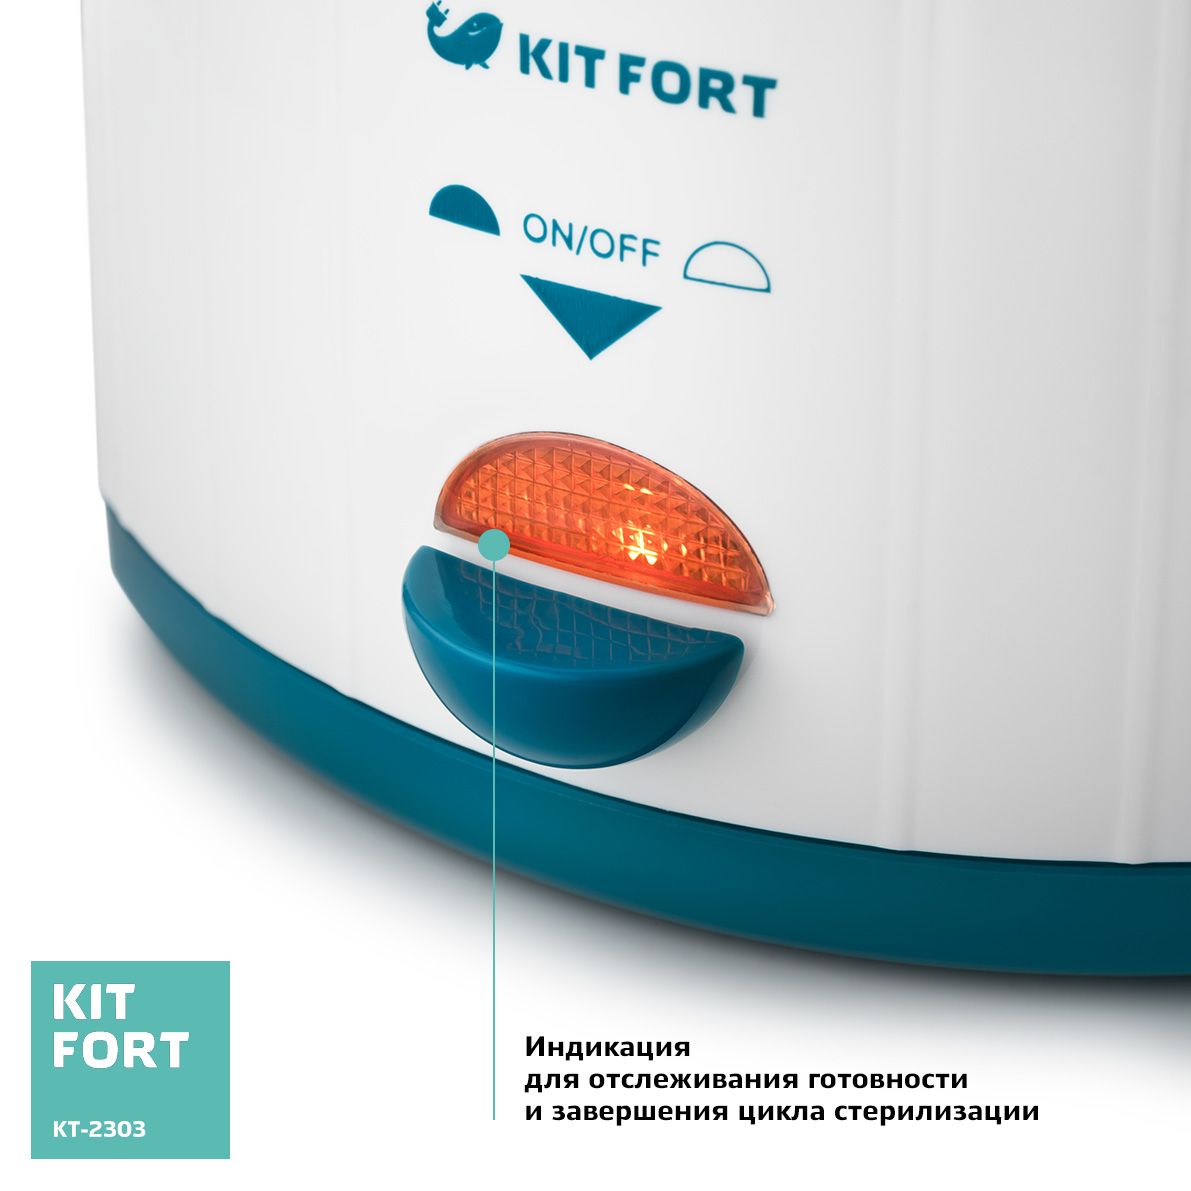 Kitfort   -2303